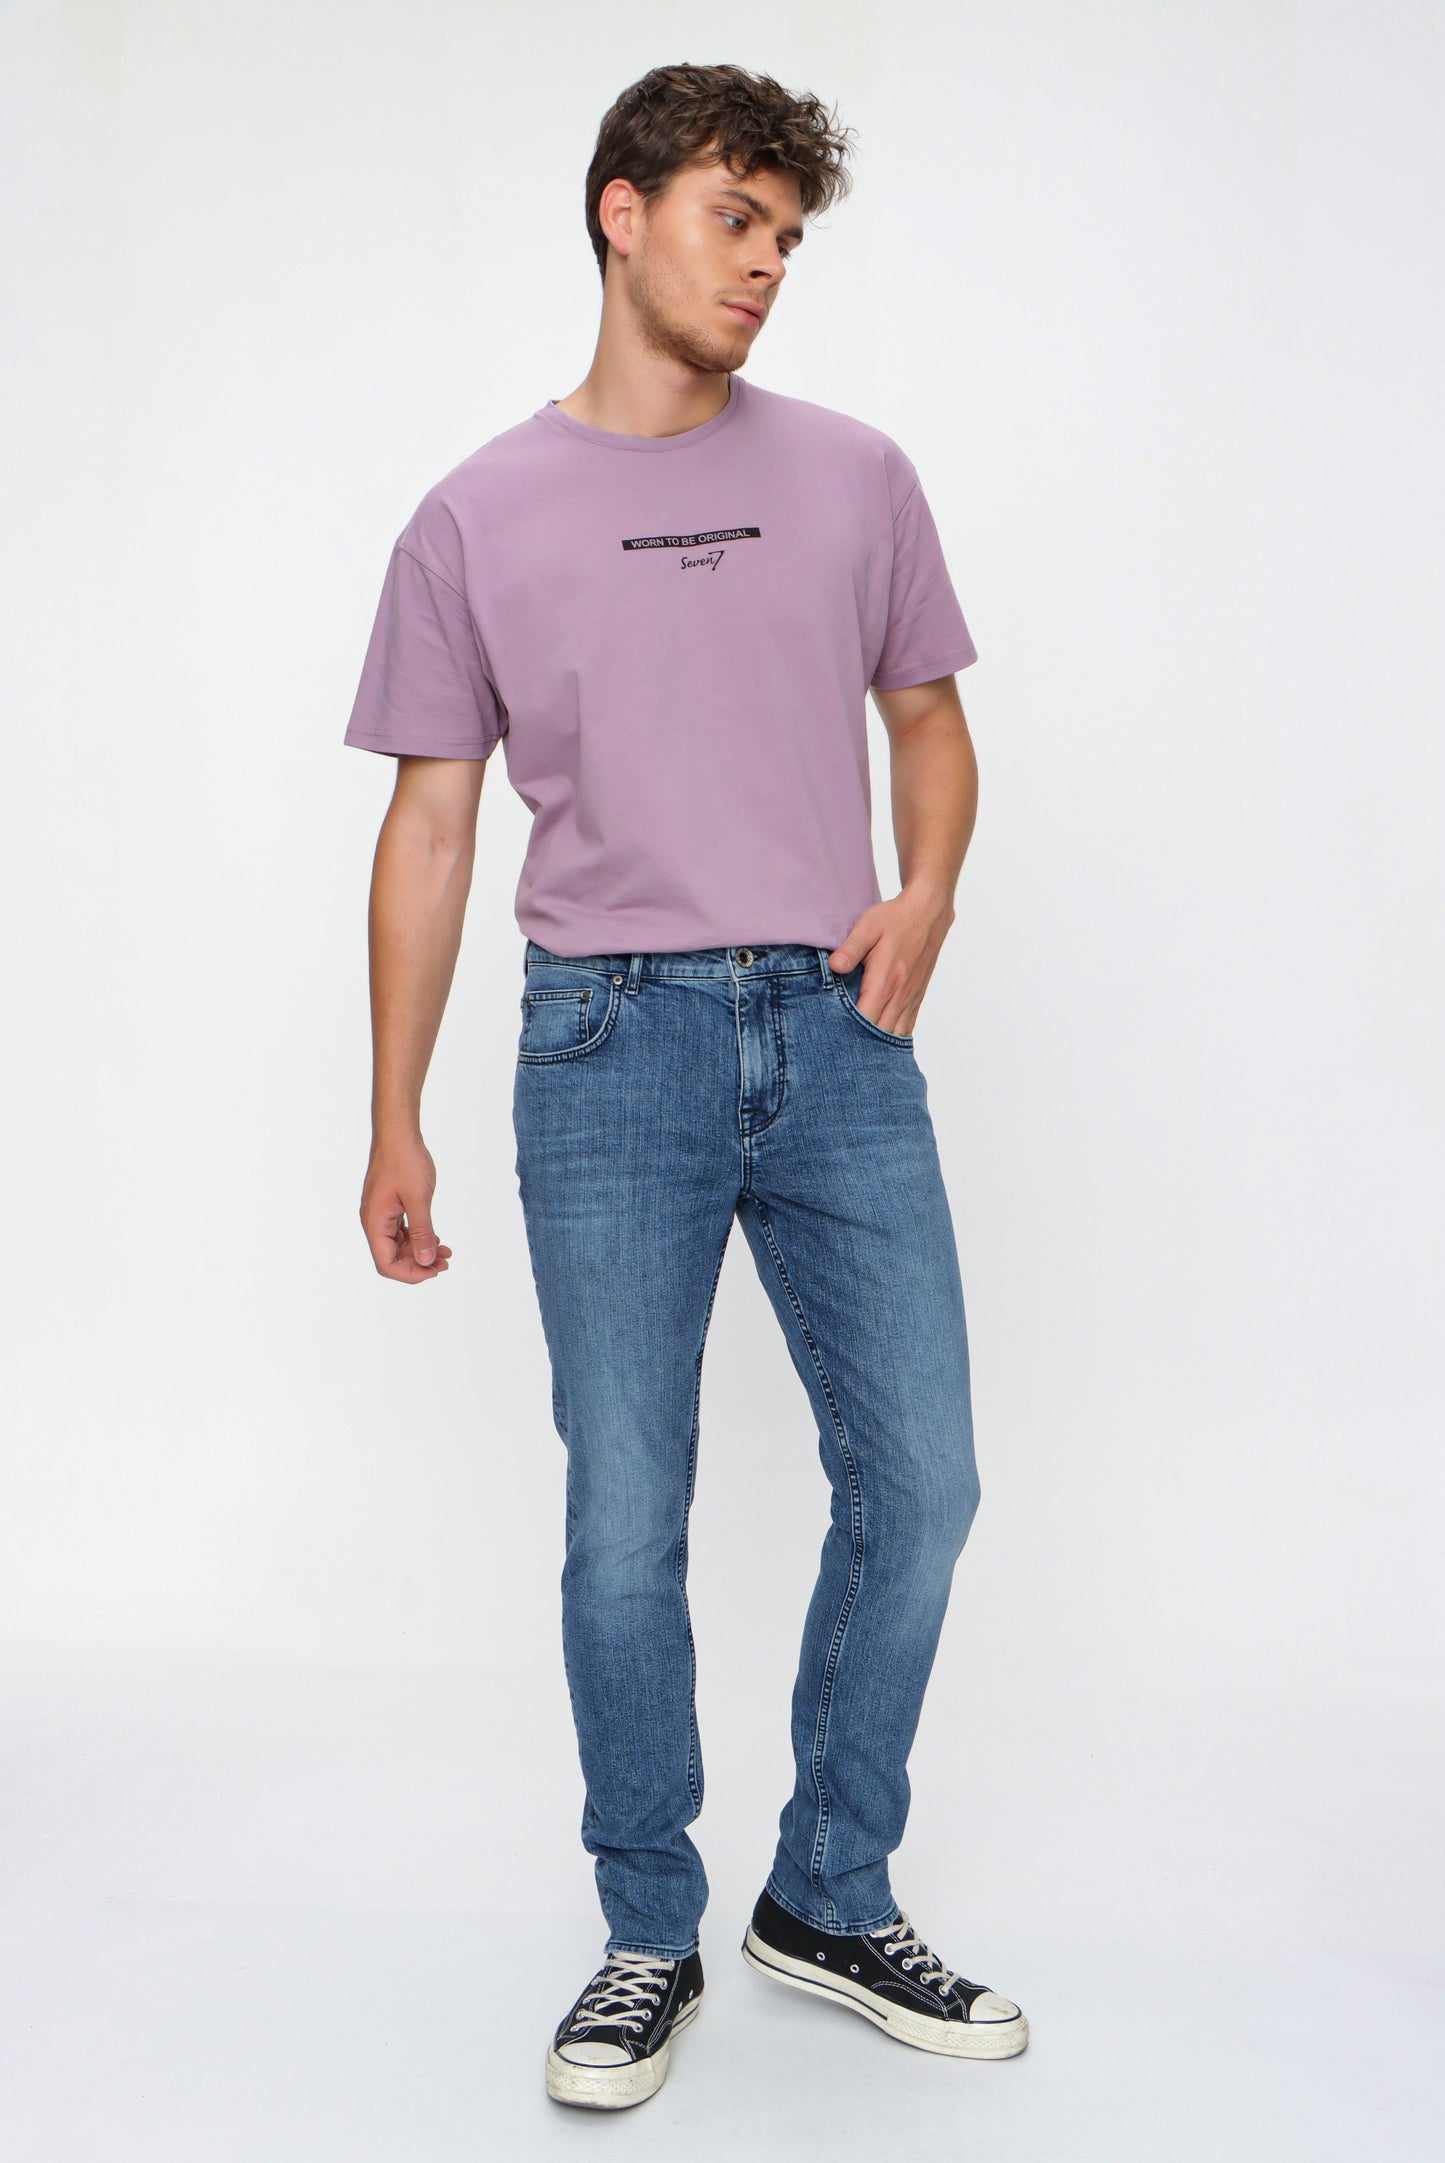 Men's Slim Fit Jeans at Seven7 Jeans